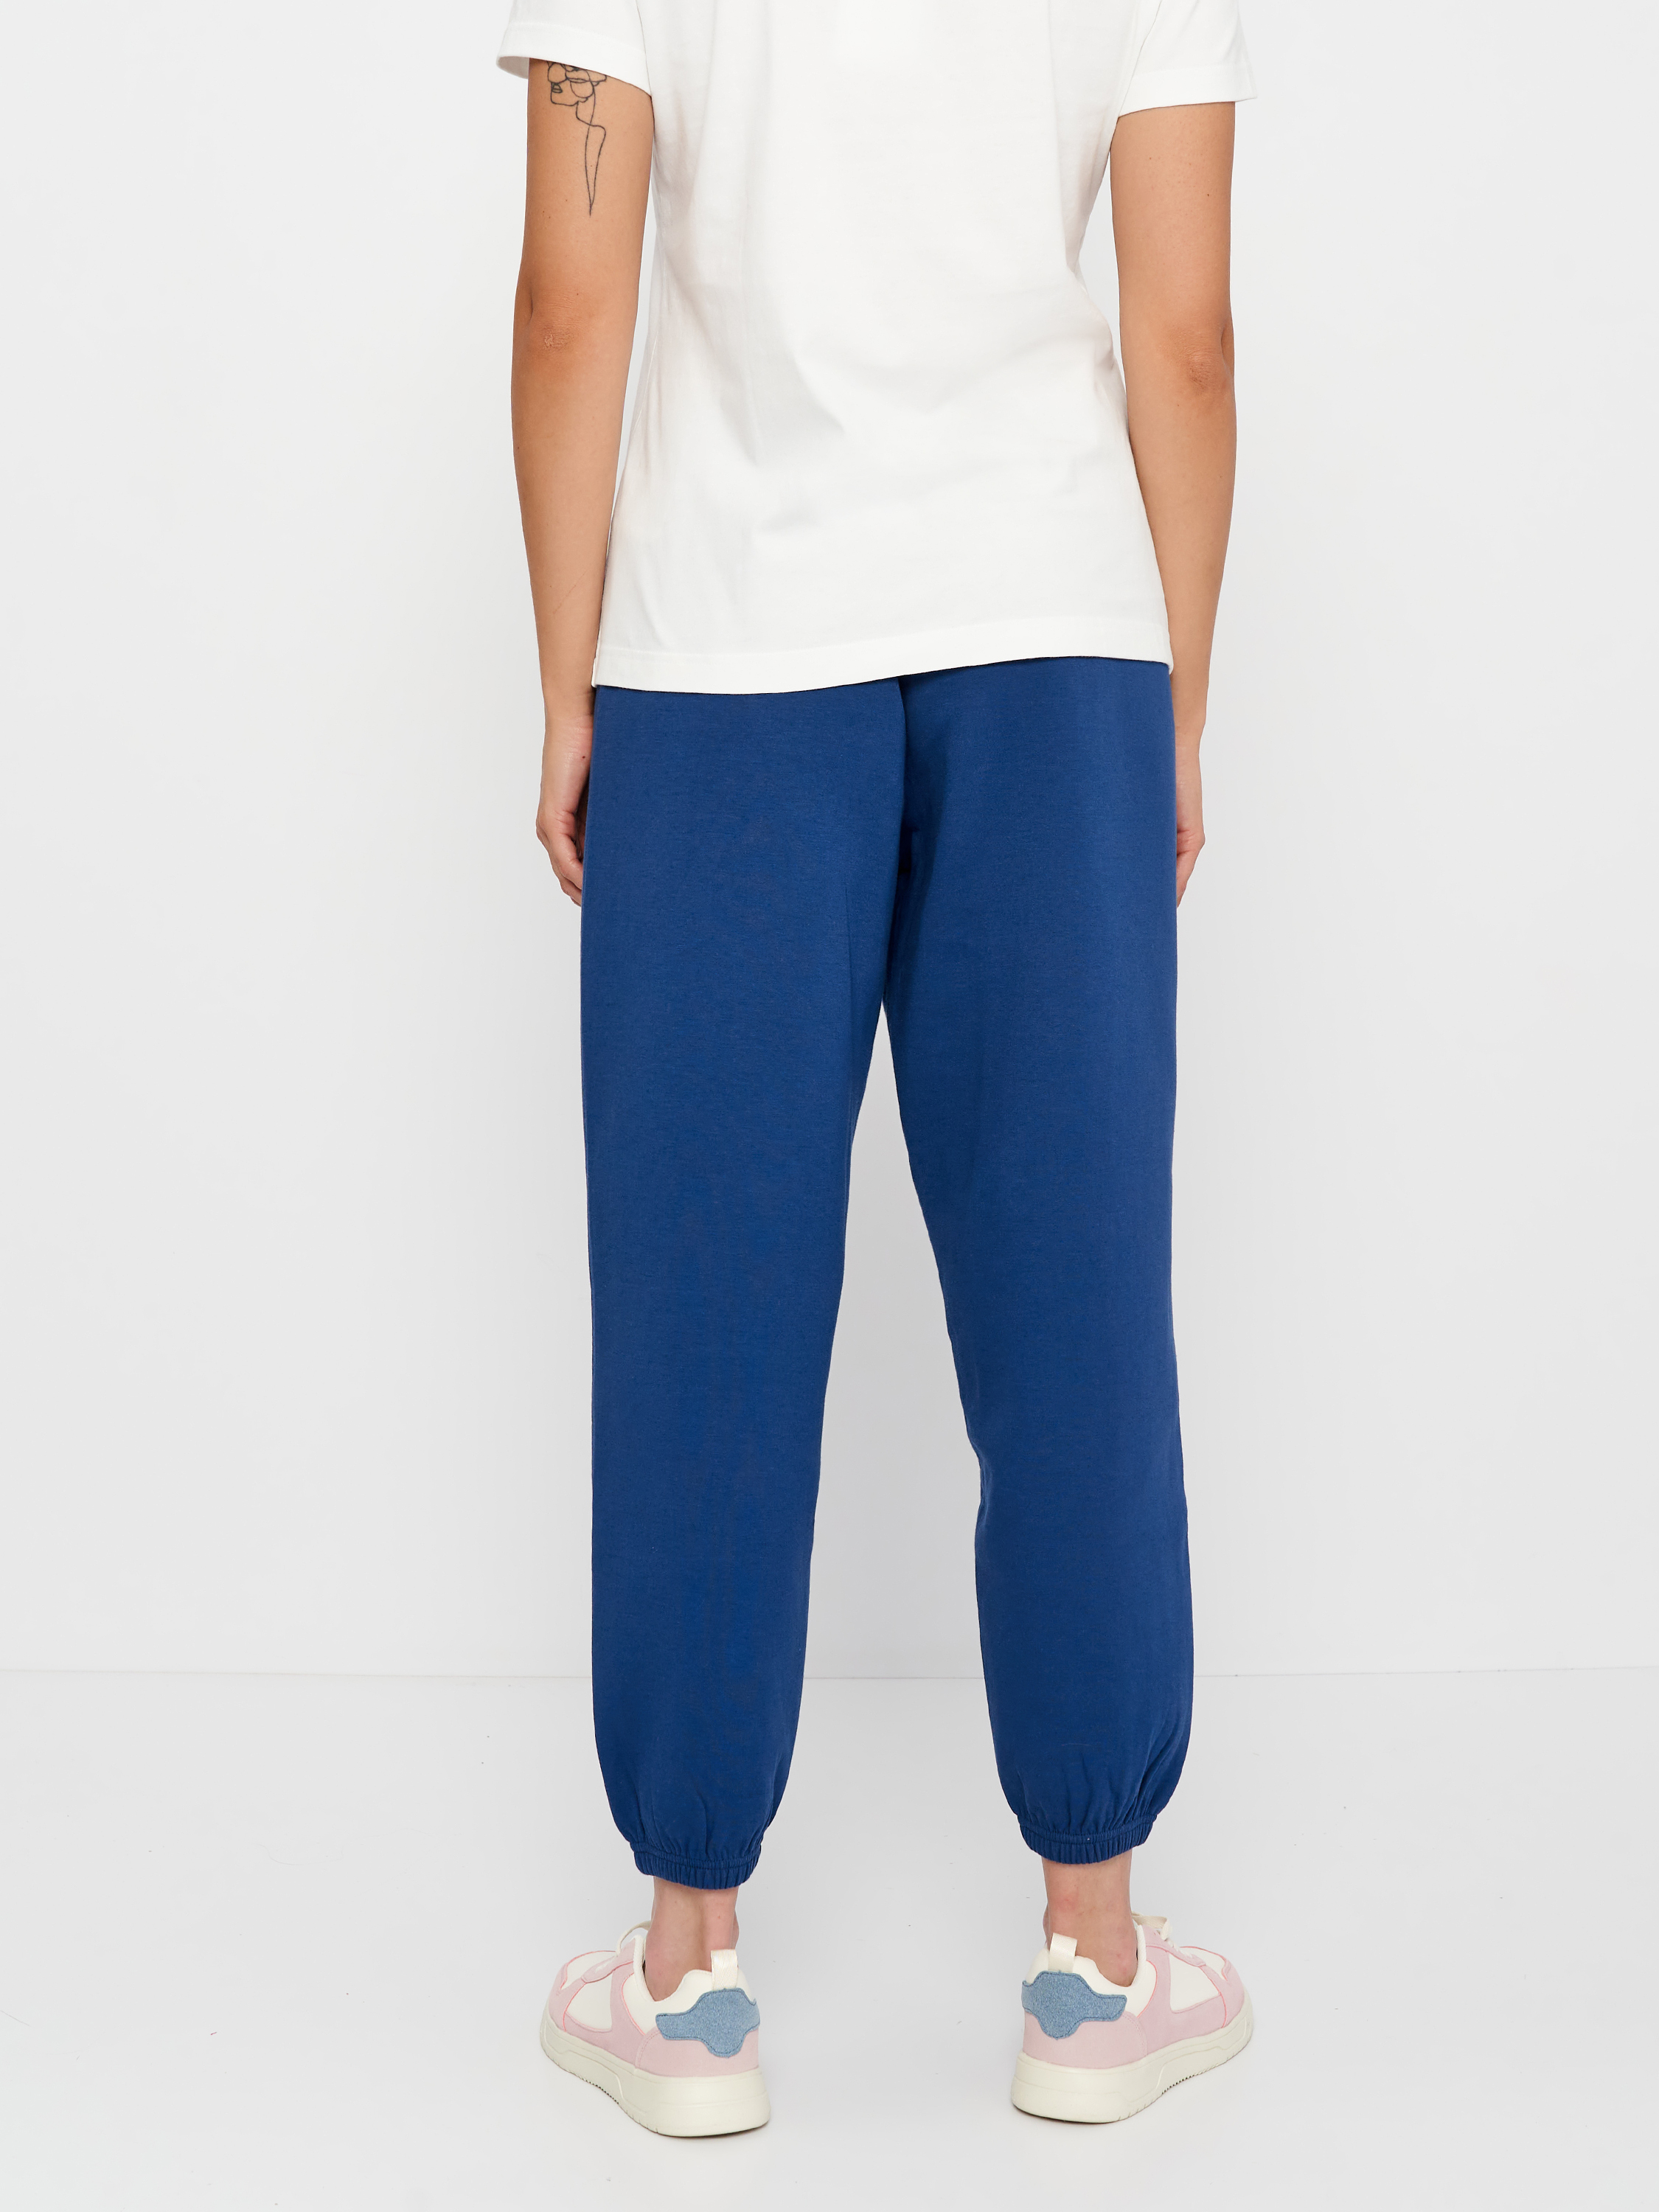 Штаны спортивные Reebok DreamBlend Cotton Knit Pants H49052 для